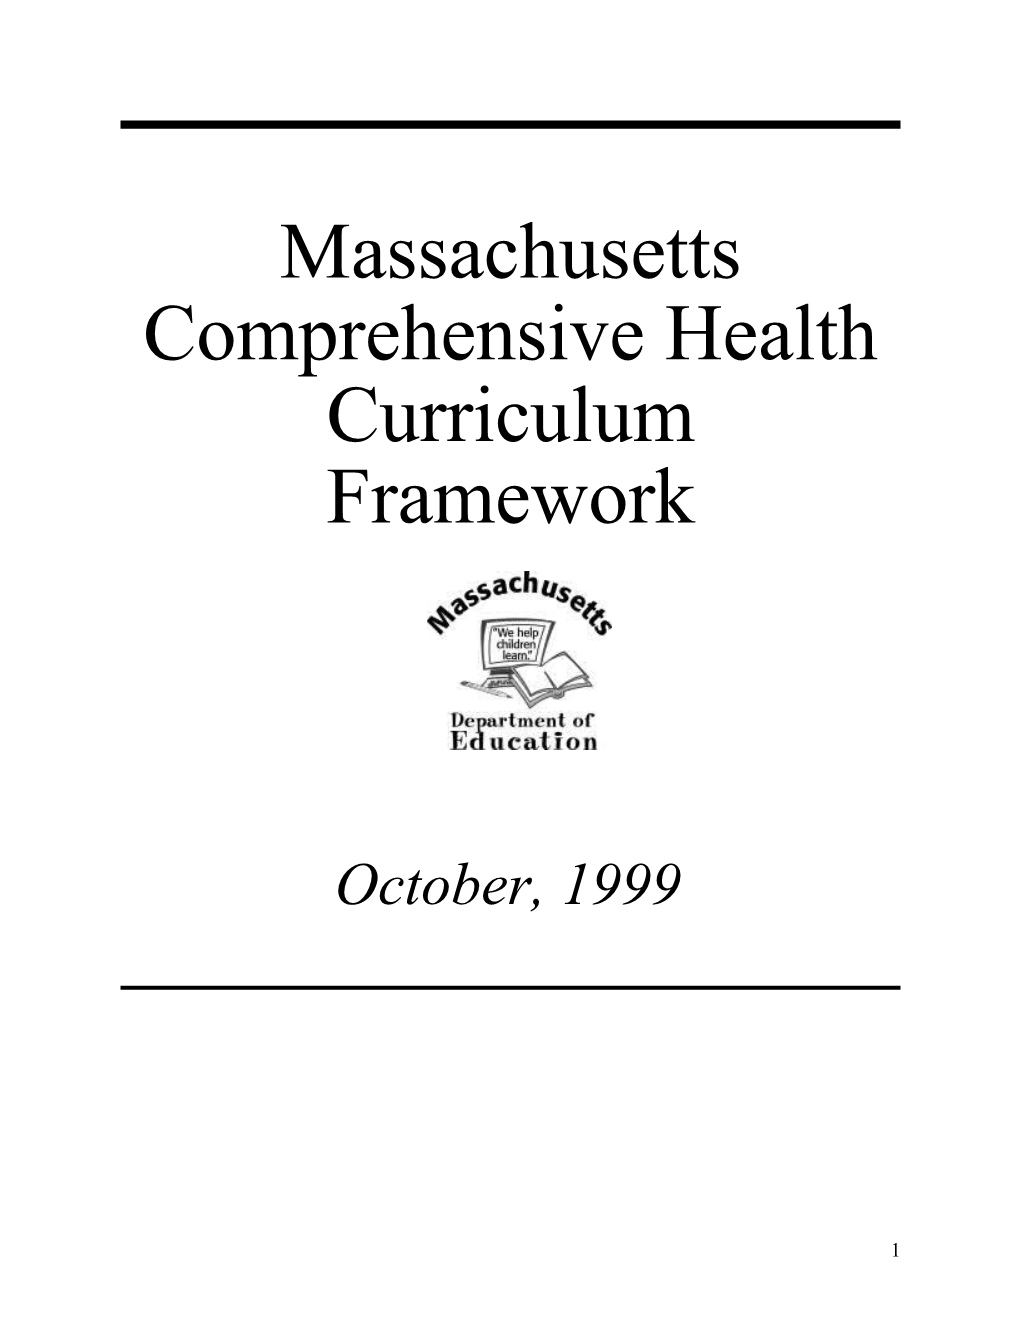 Massachusetts Comprehensive Health Curriculum Framework - October 1999